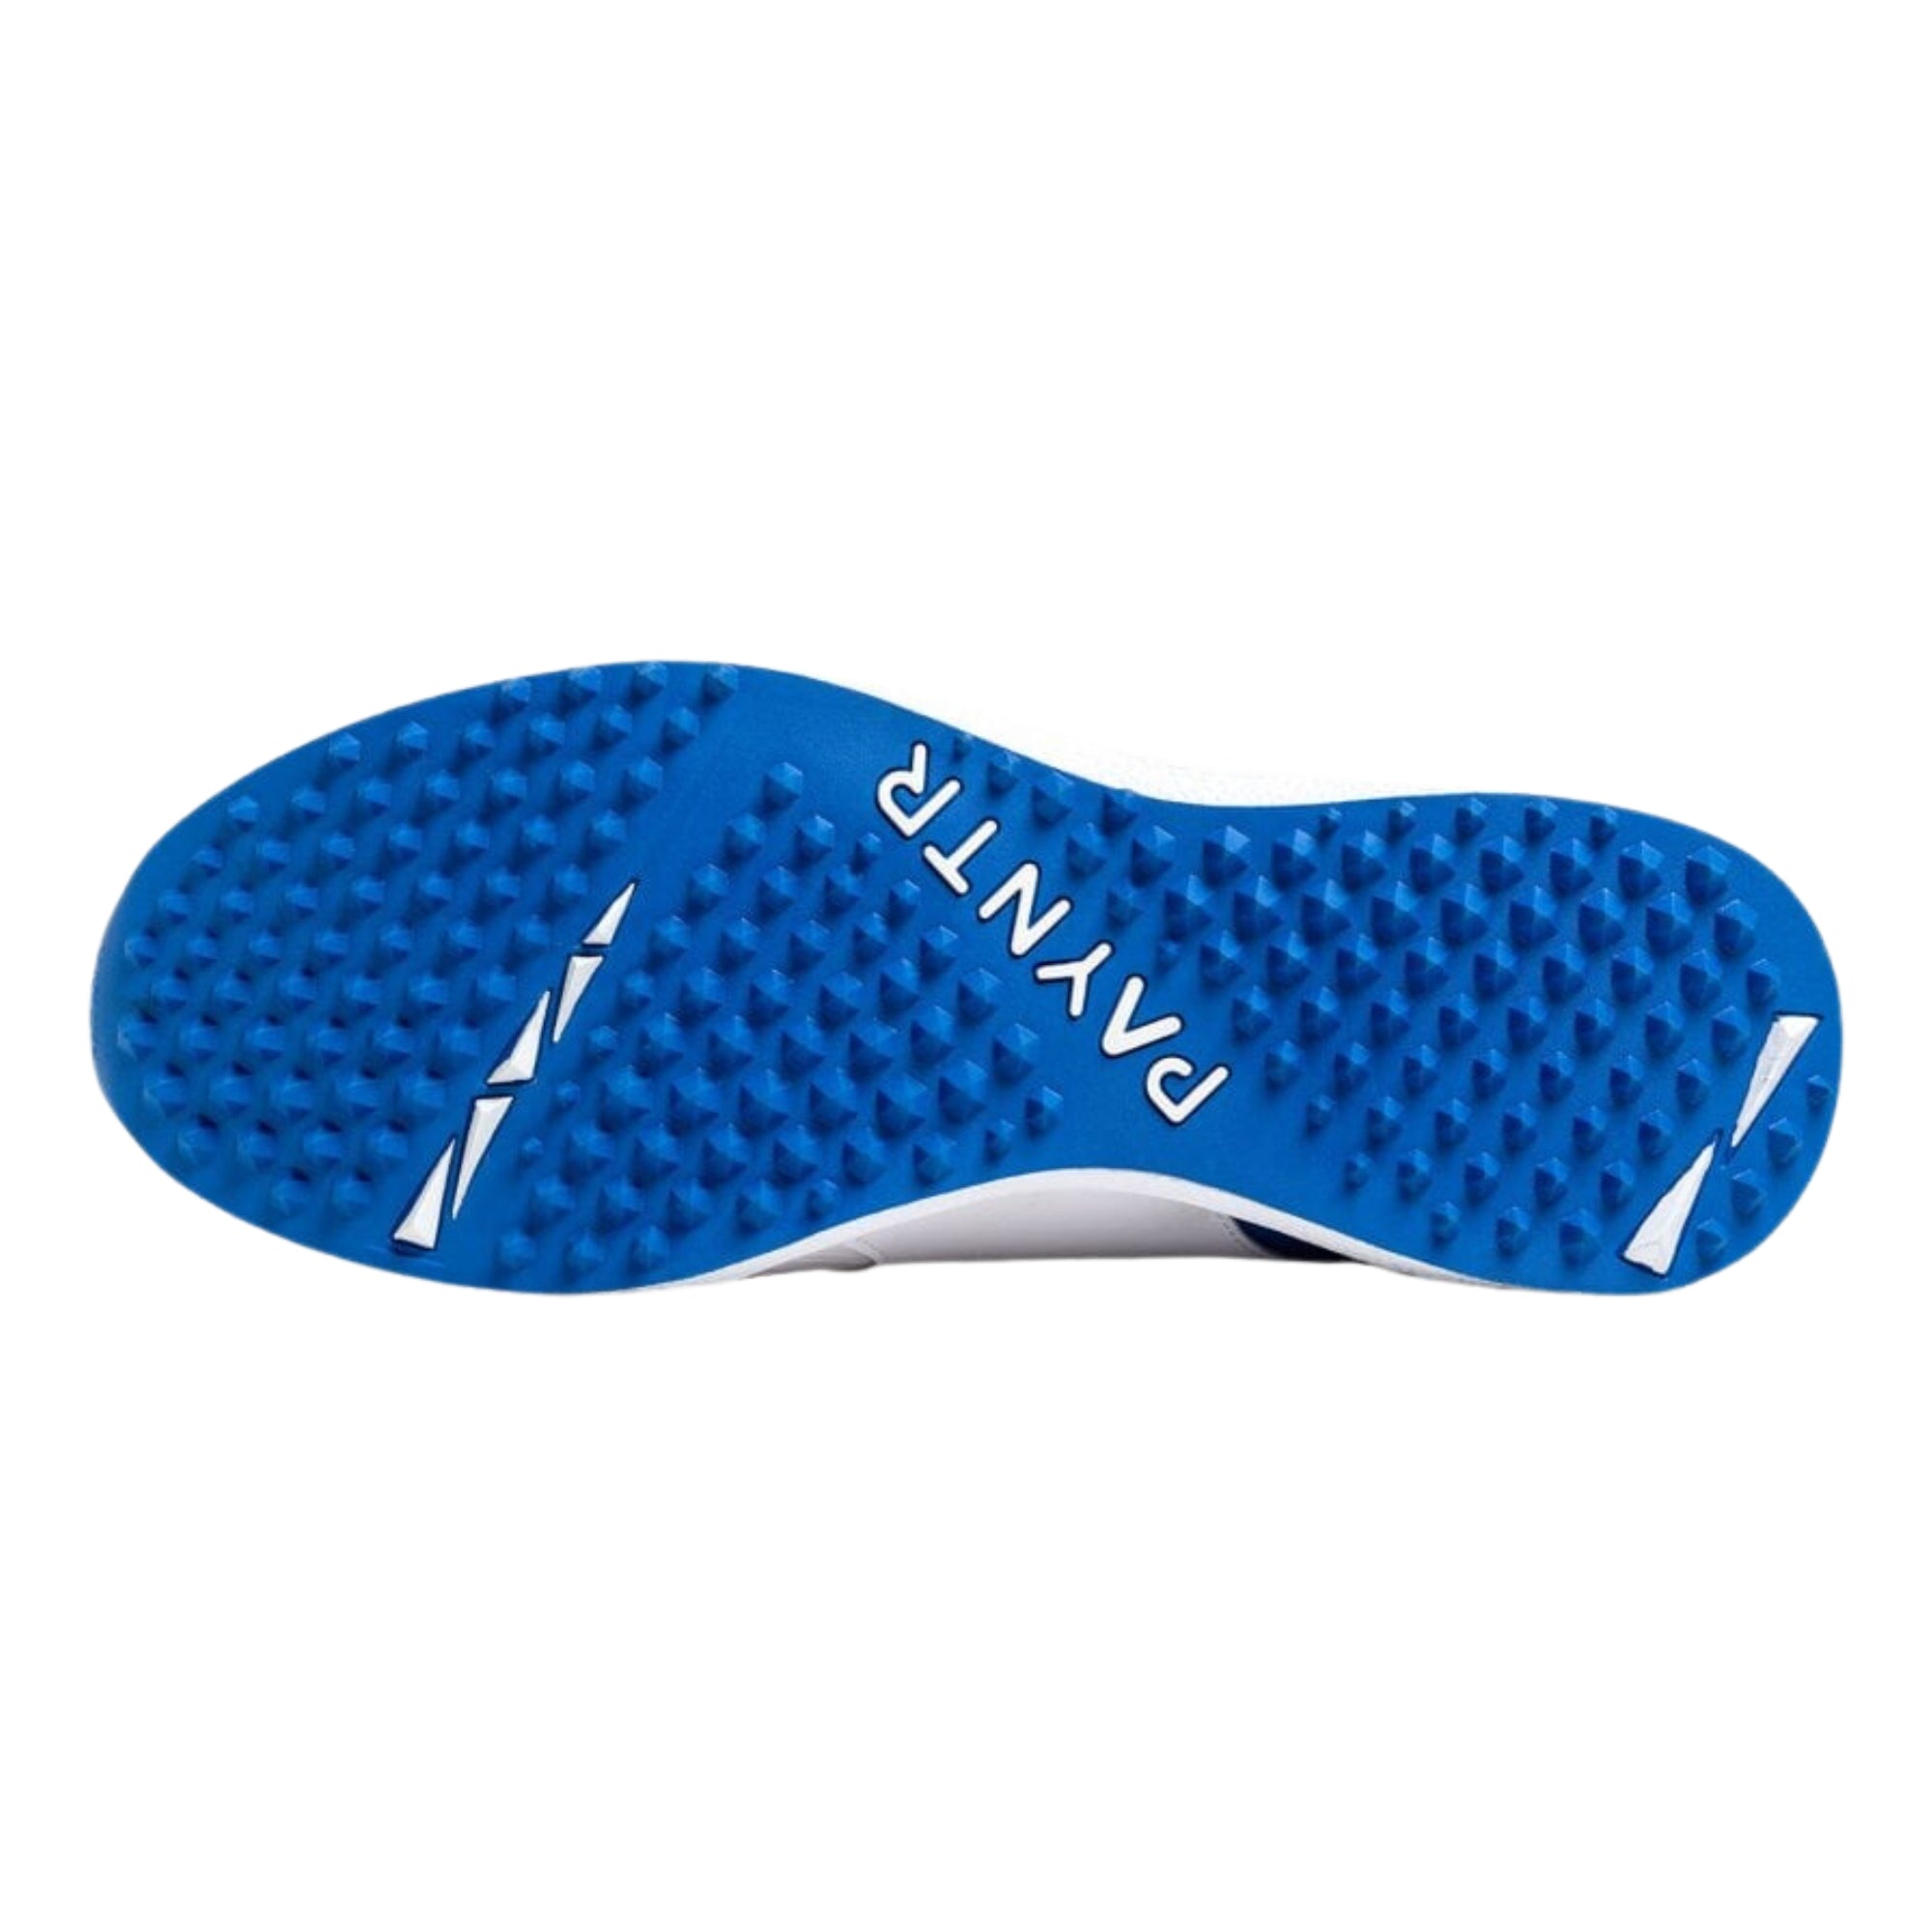 Payntr Cricket Shoes, Model V Pimple - White/Blue